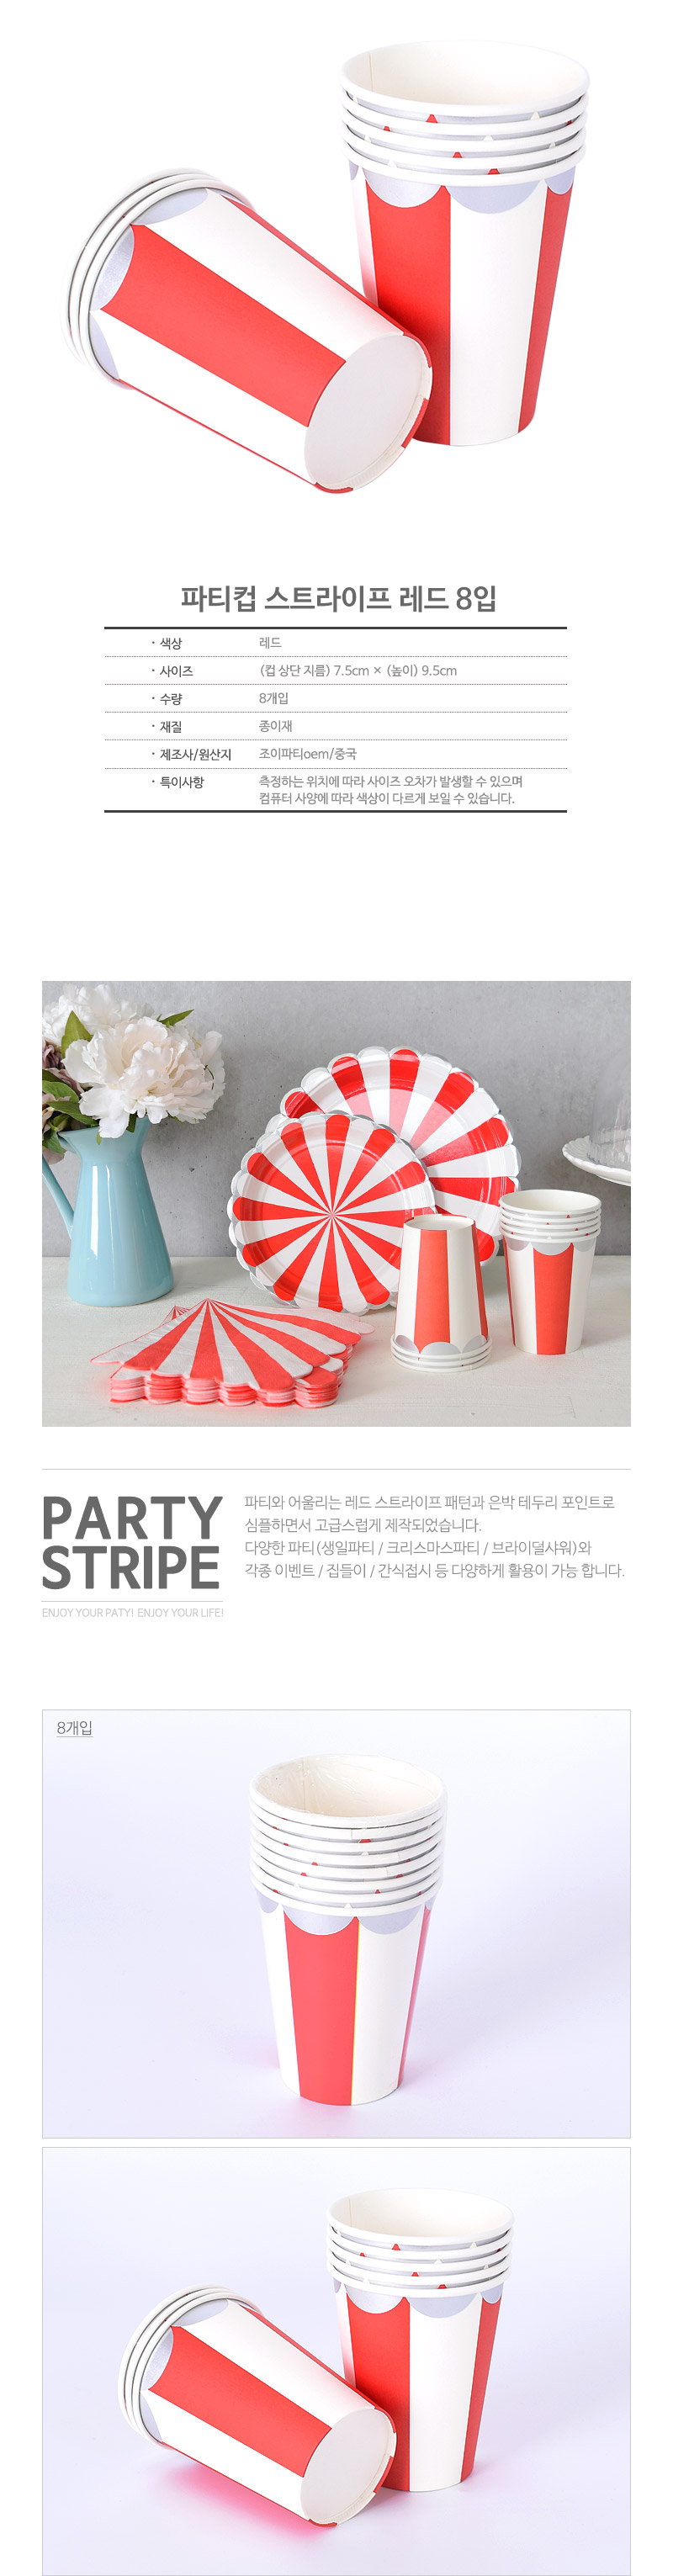 partystripe_cup_R_roll.jpg